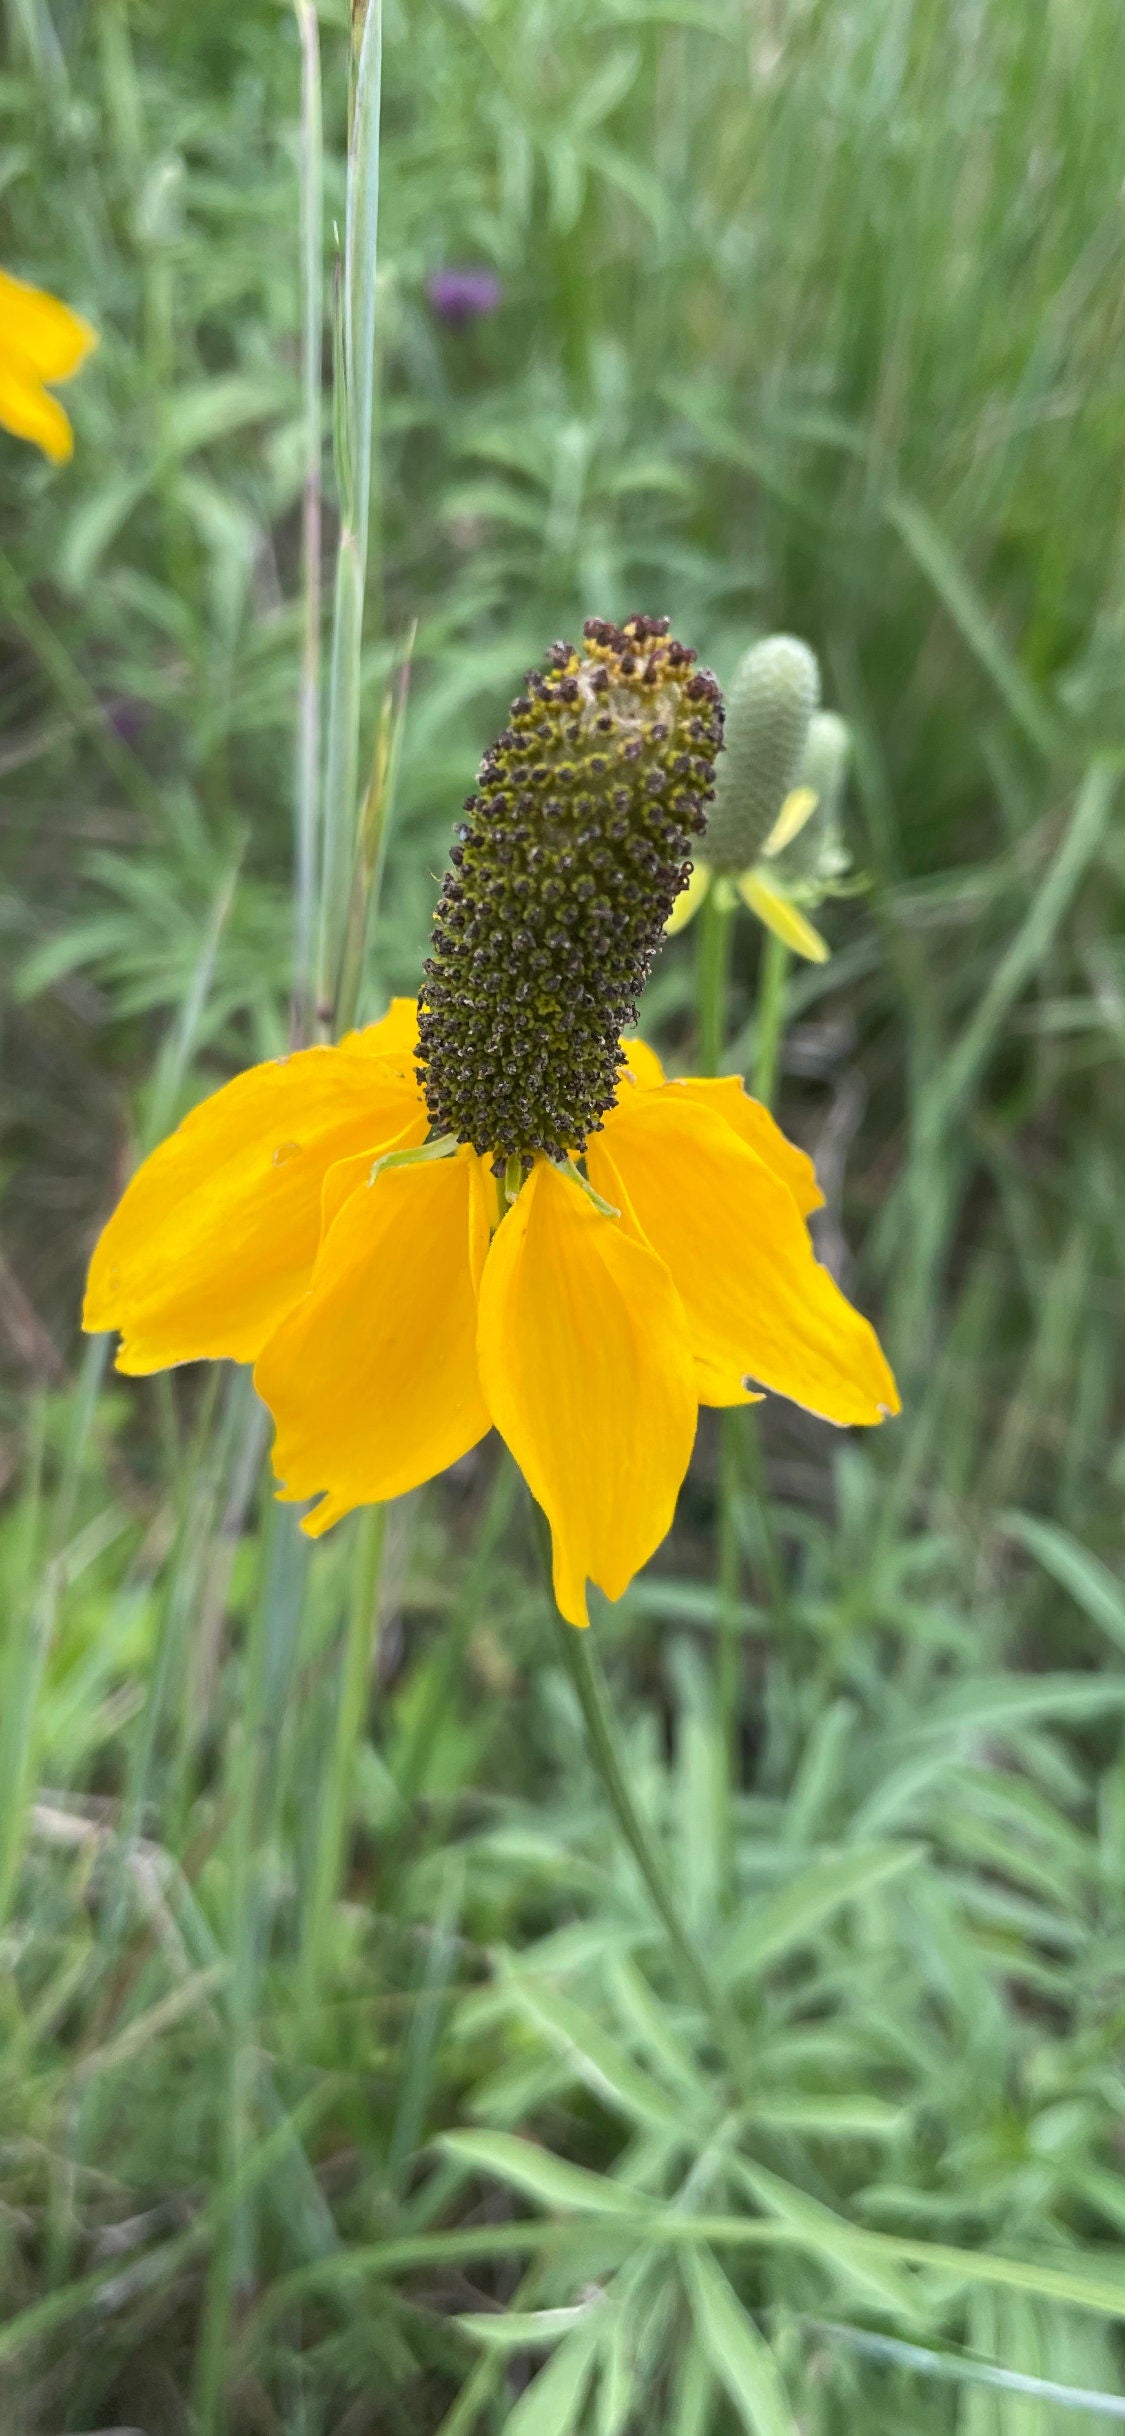 Upright Prairie Coneflower, Mexican Hat (Rudbeckia columnifera) - Native Perennial Flower - 50+ Seeds